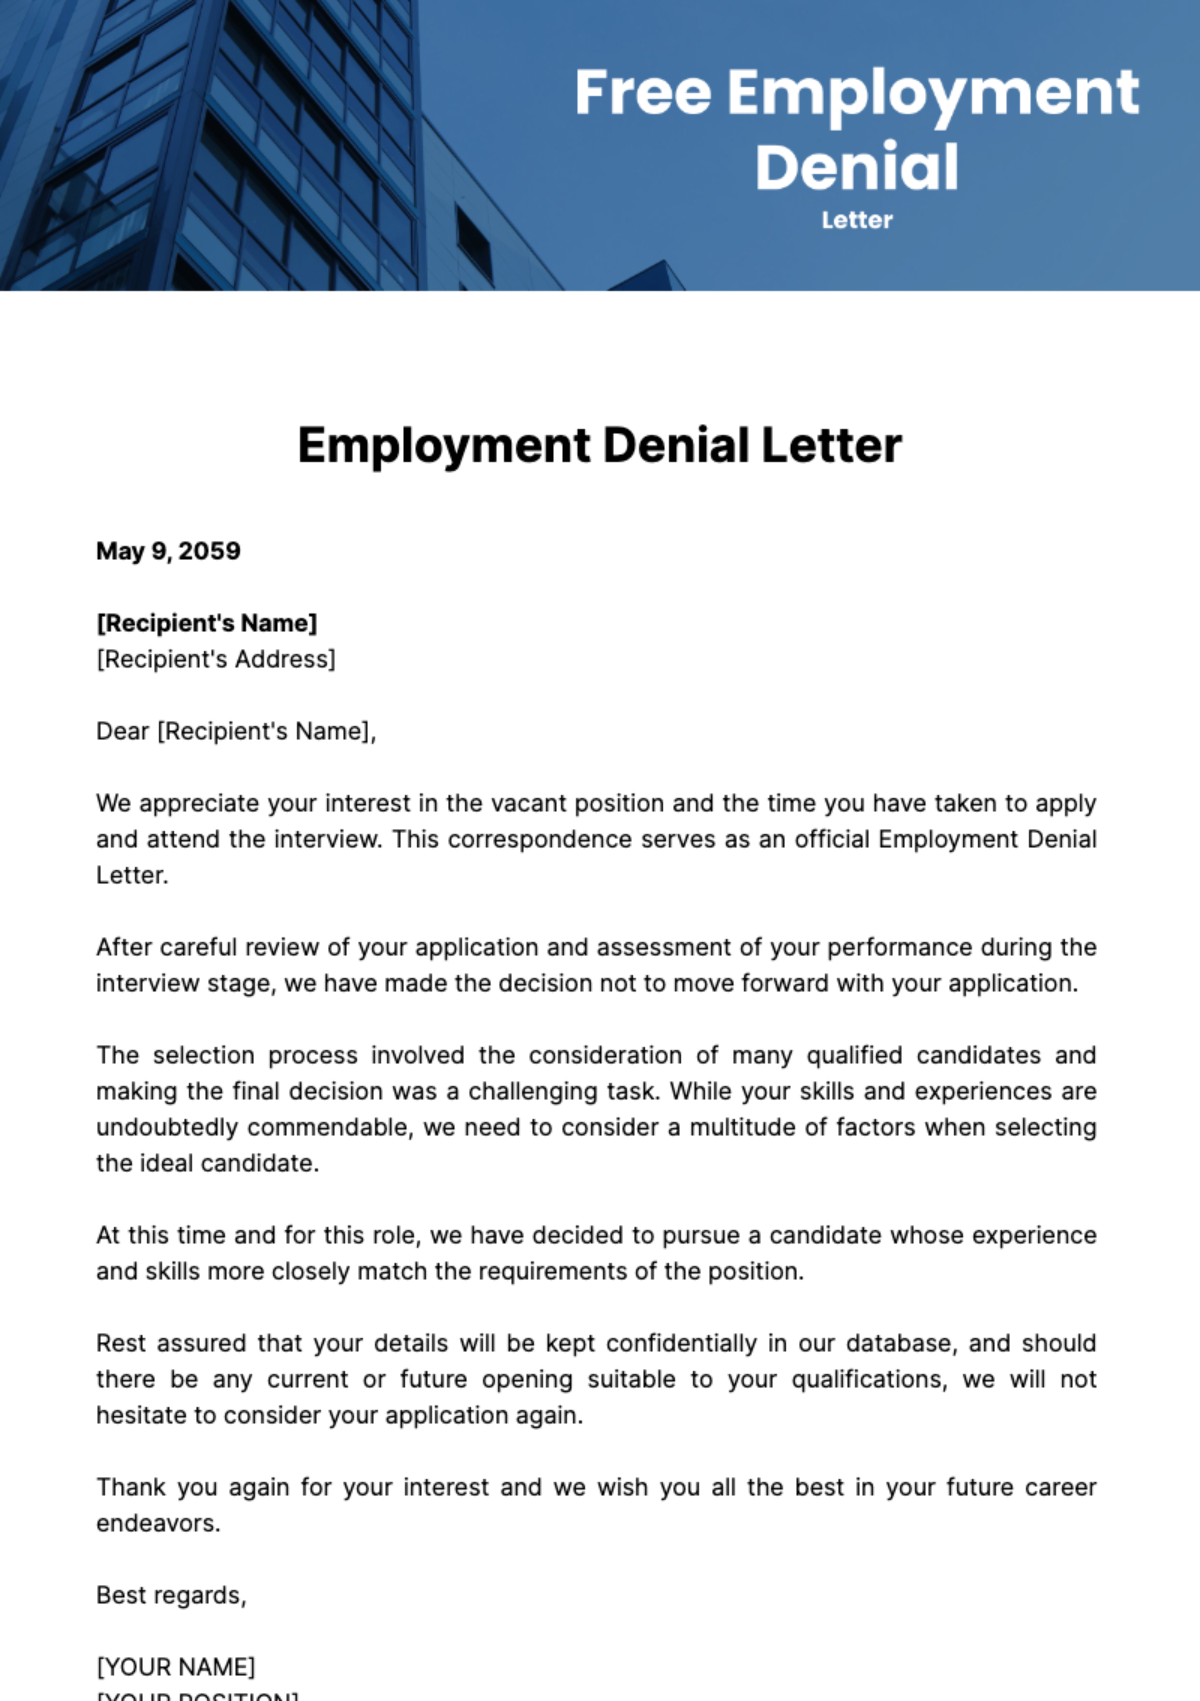 Free Employment Denial Letter Template